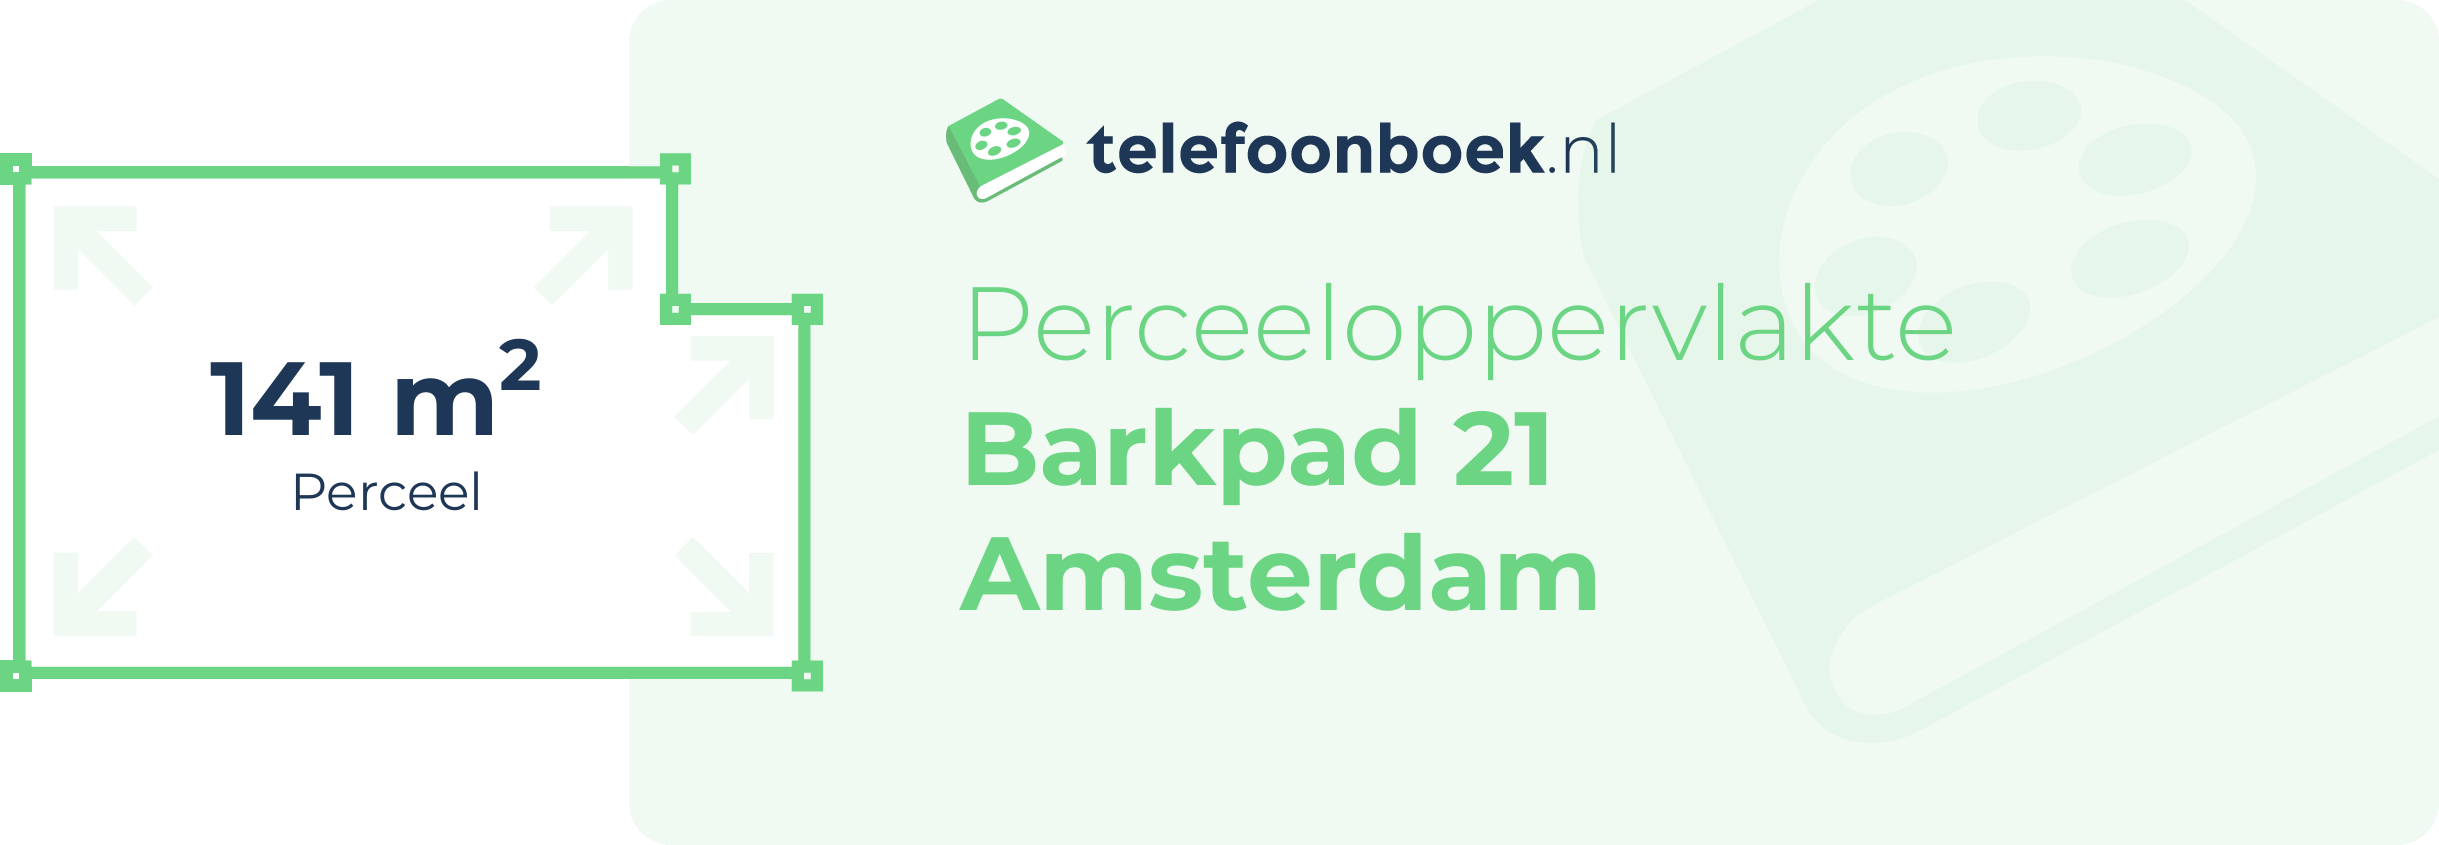 Perceeloppervlakte Barkpad 21 Amsterdam